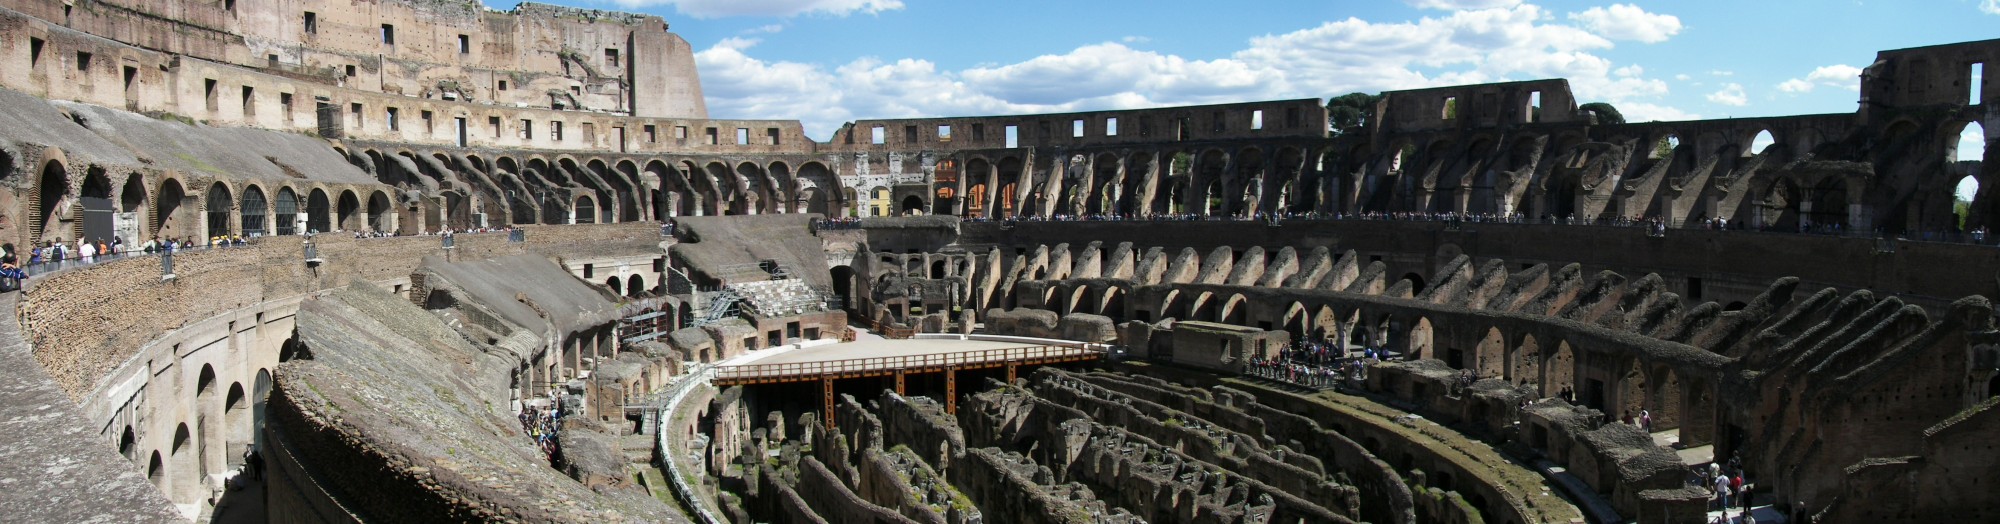 Colosseum interior panoramic